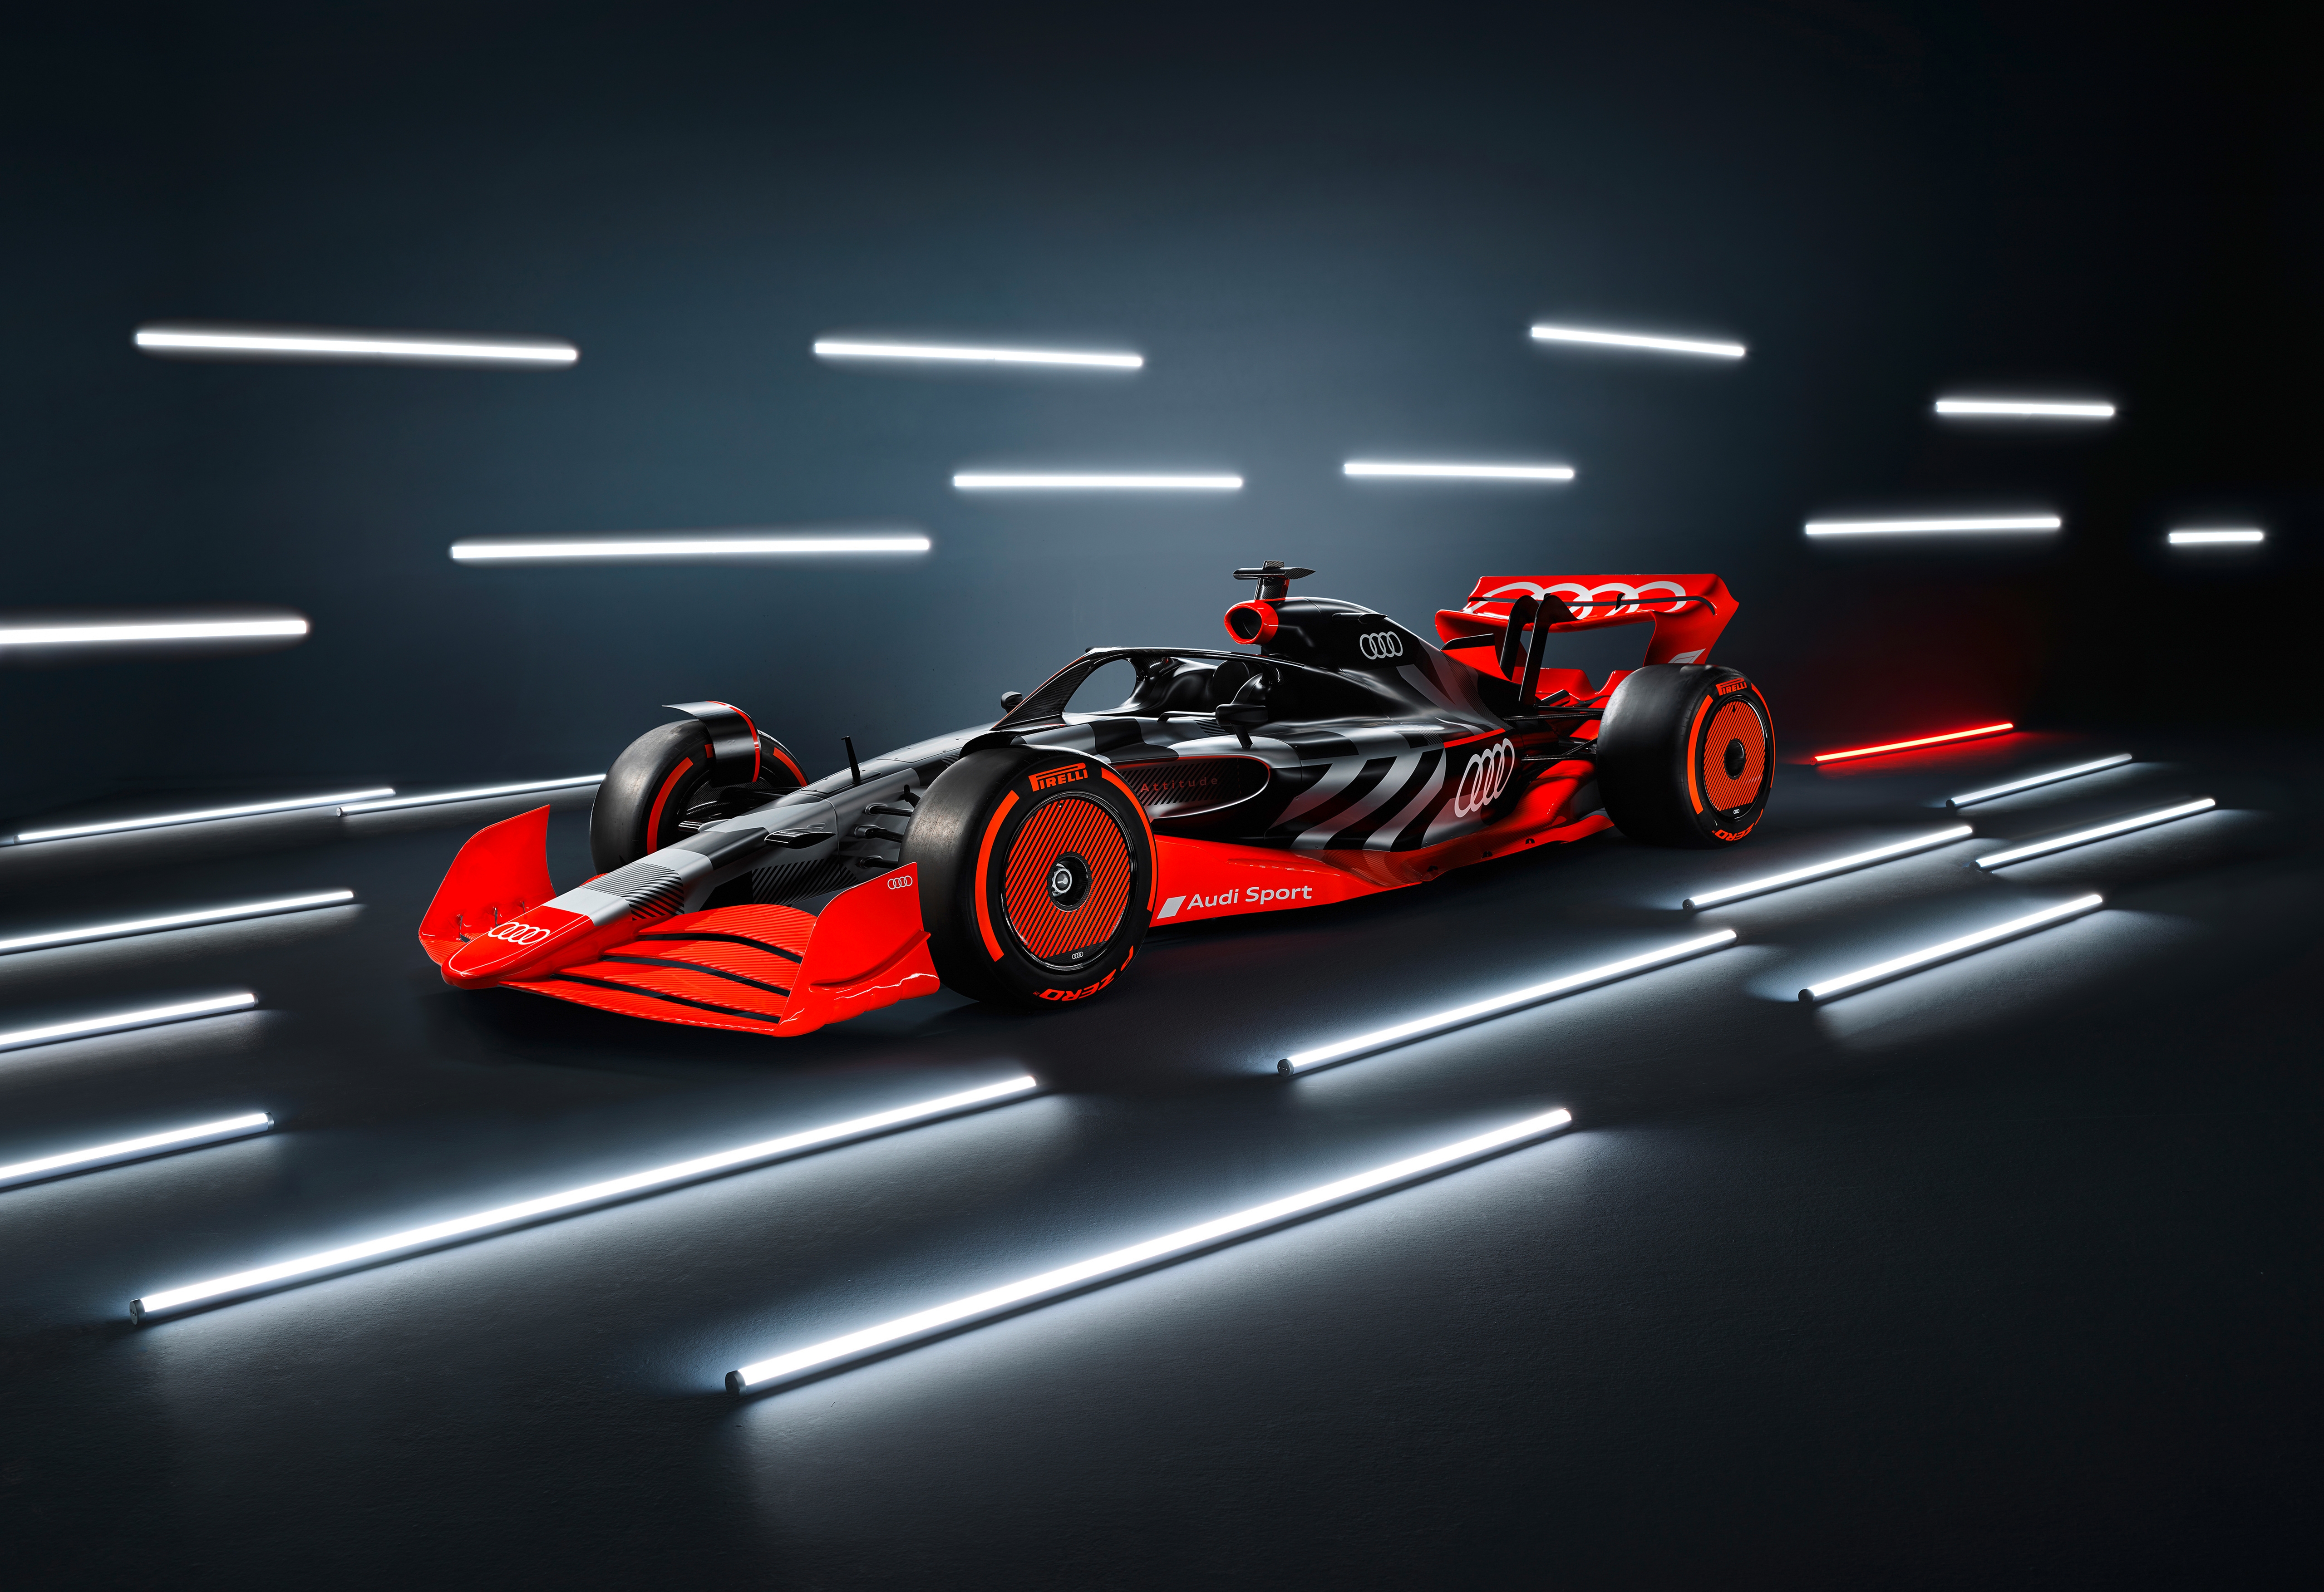 HD wallpaper, Formula E Racing Car, 2022, Audi F1 Launch Livery, 5K, 5K